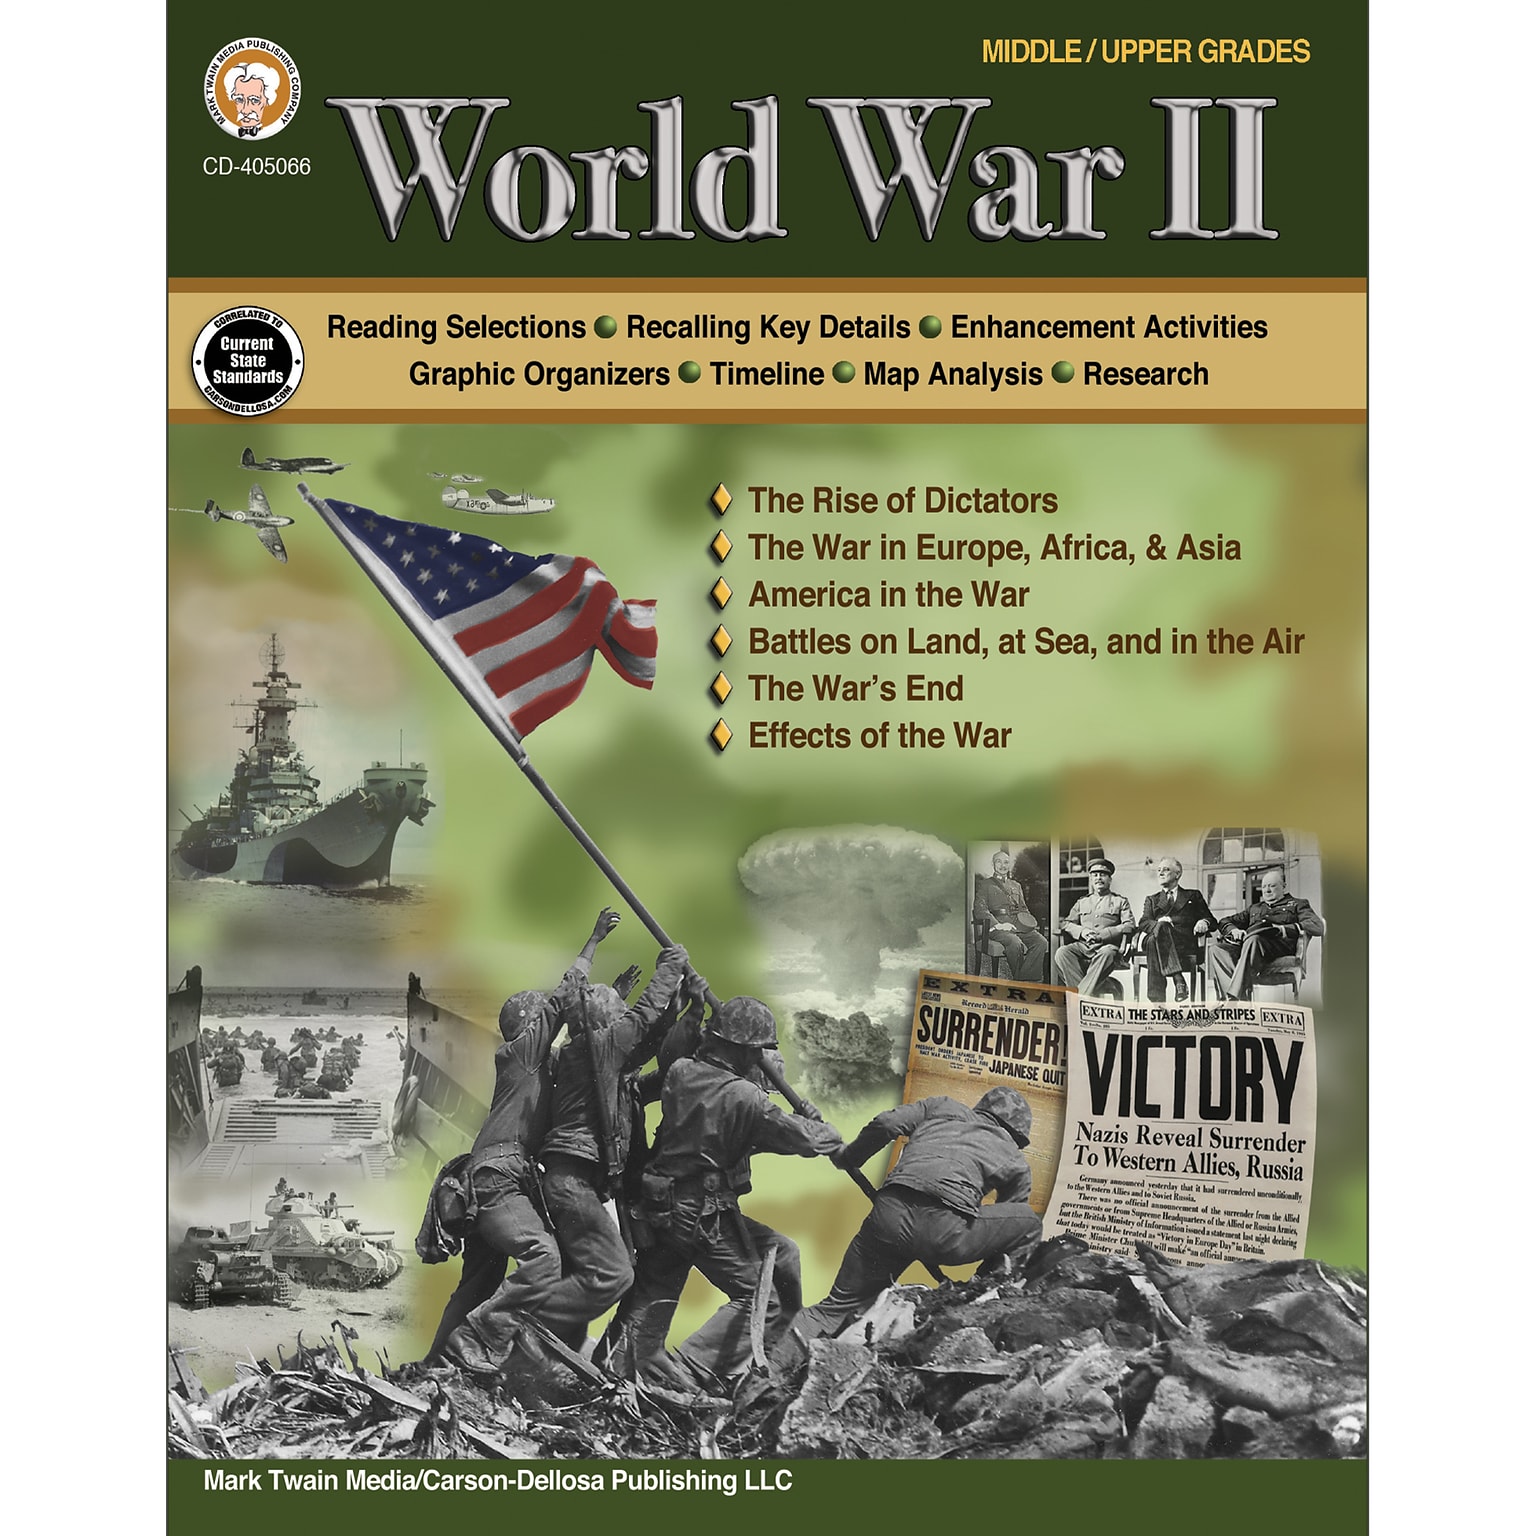 World War II Workbook, Grades 6-12 by Mark Twain Media, Paperback (9781622238514)